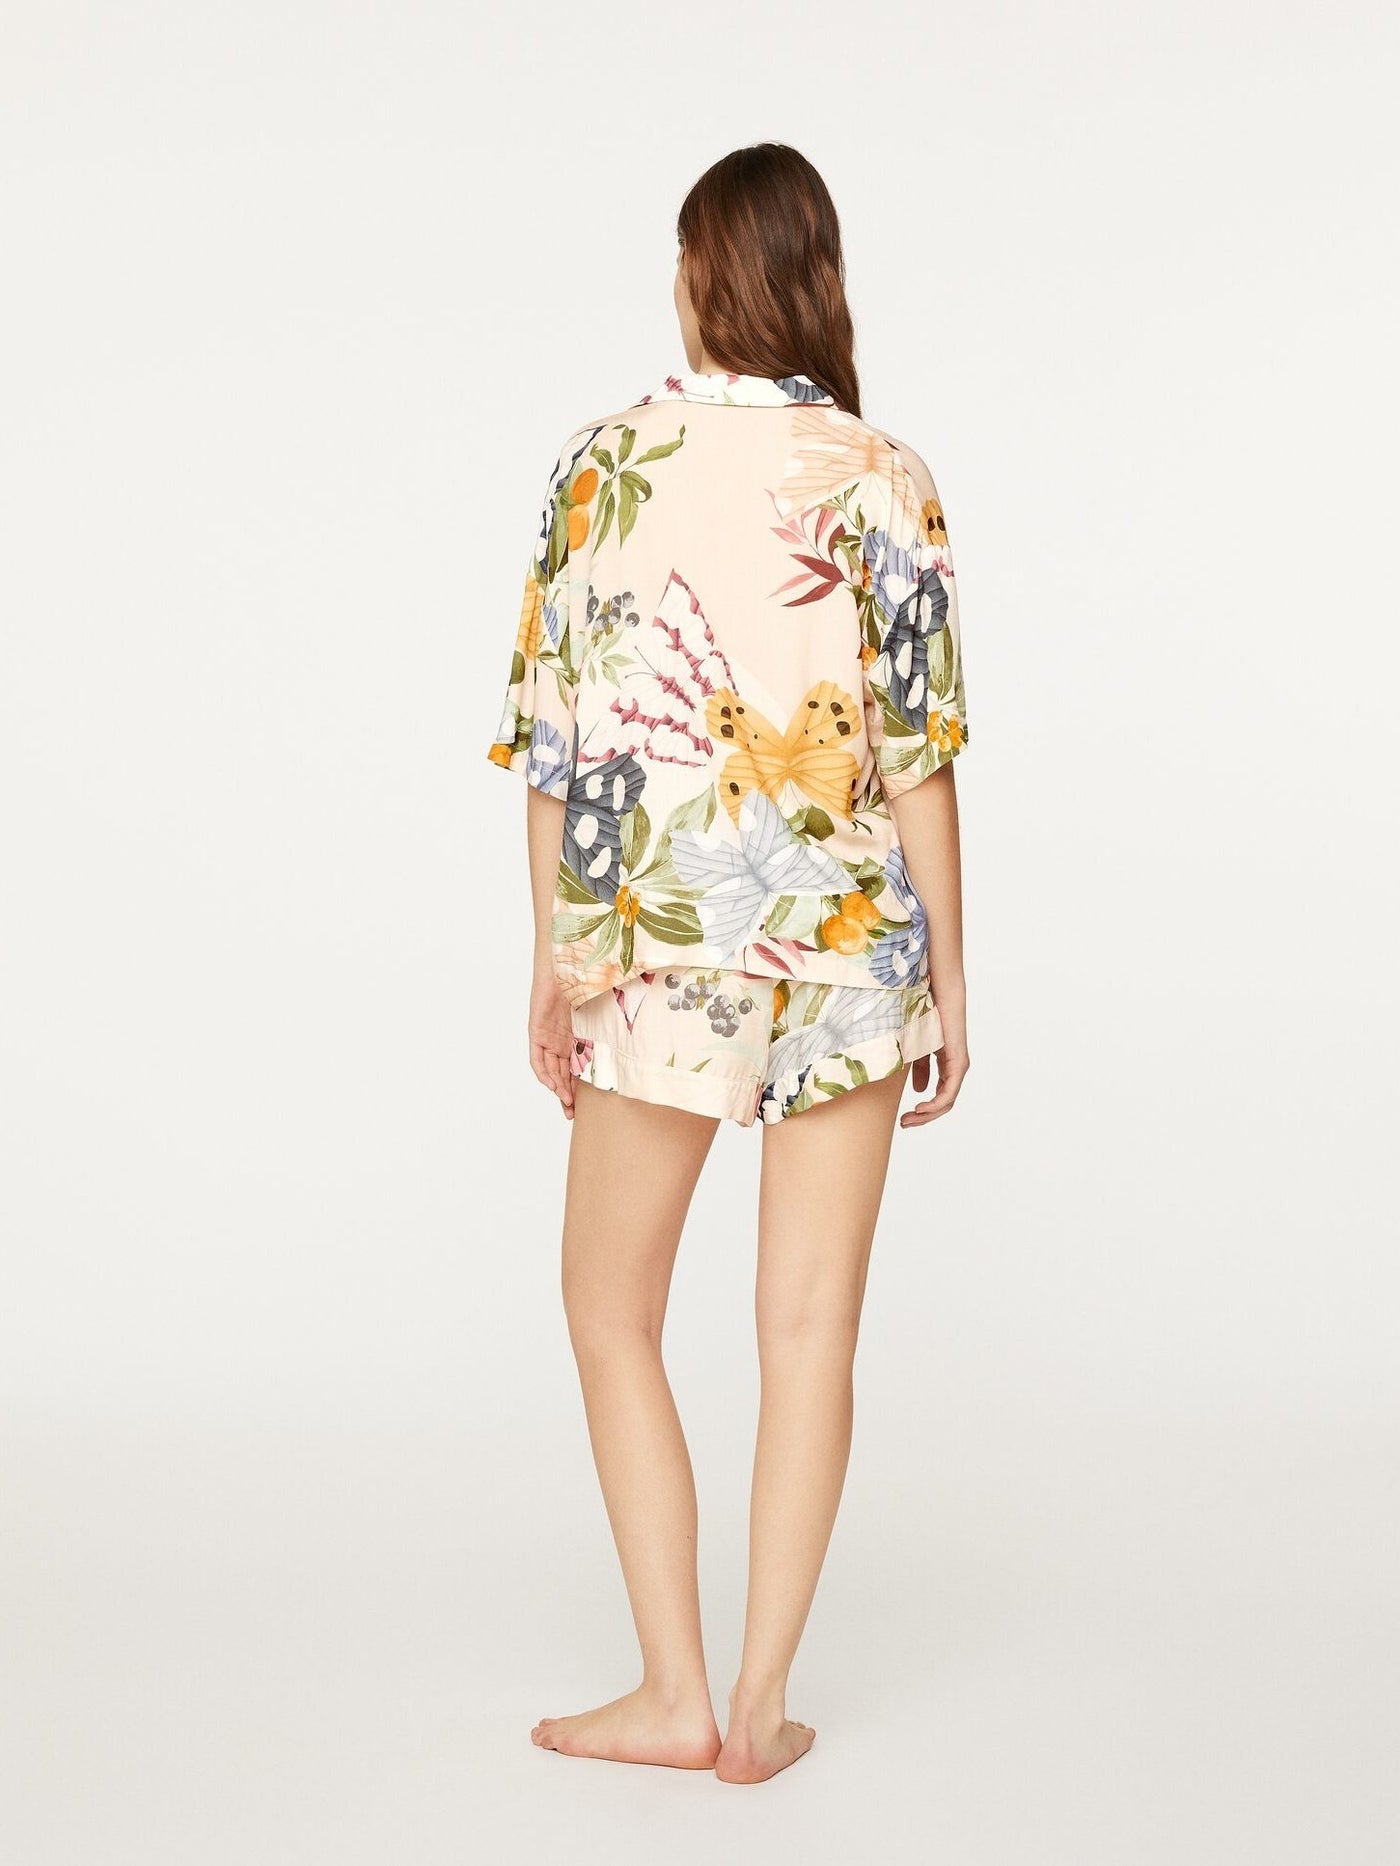 June Collection | Spring Flowers Shorts Set - Lulusleepwear